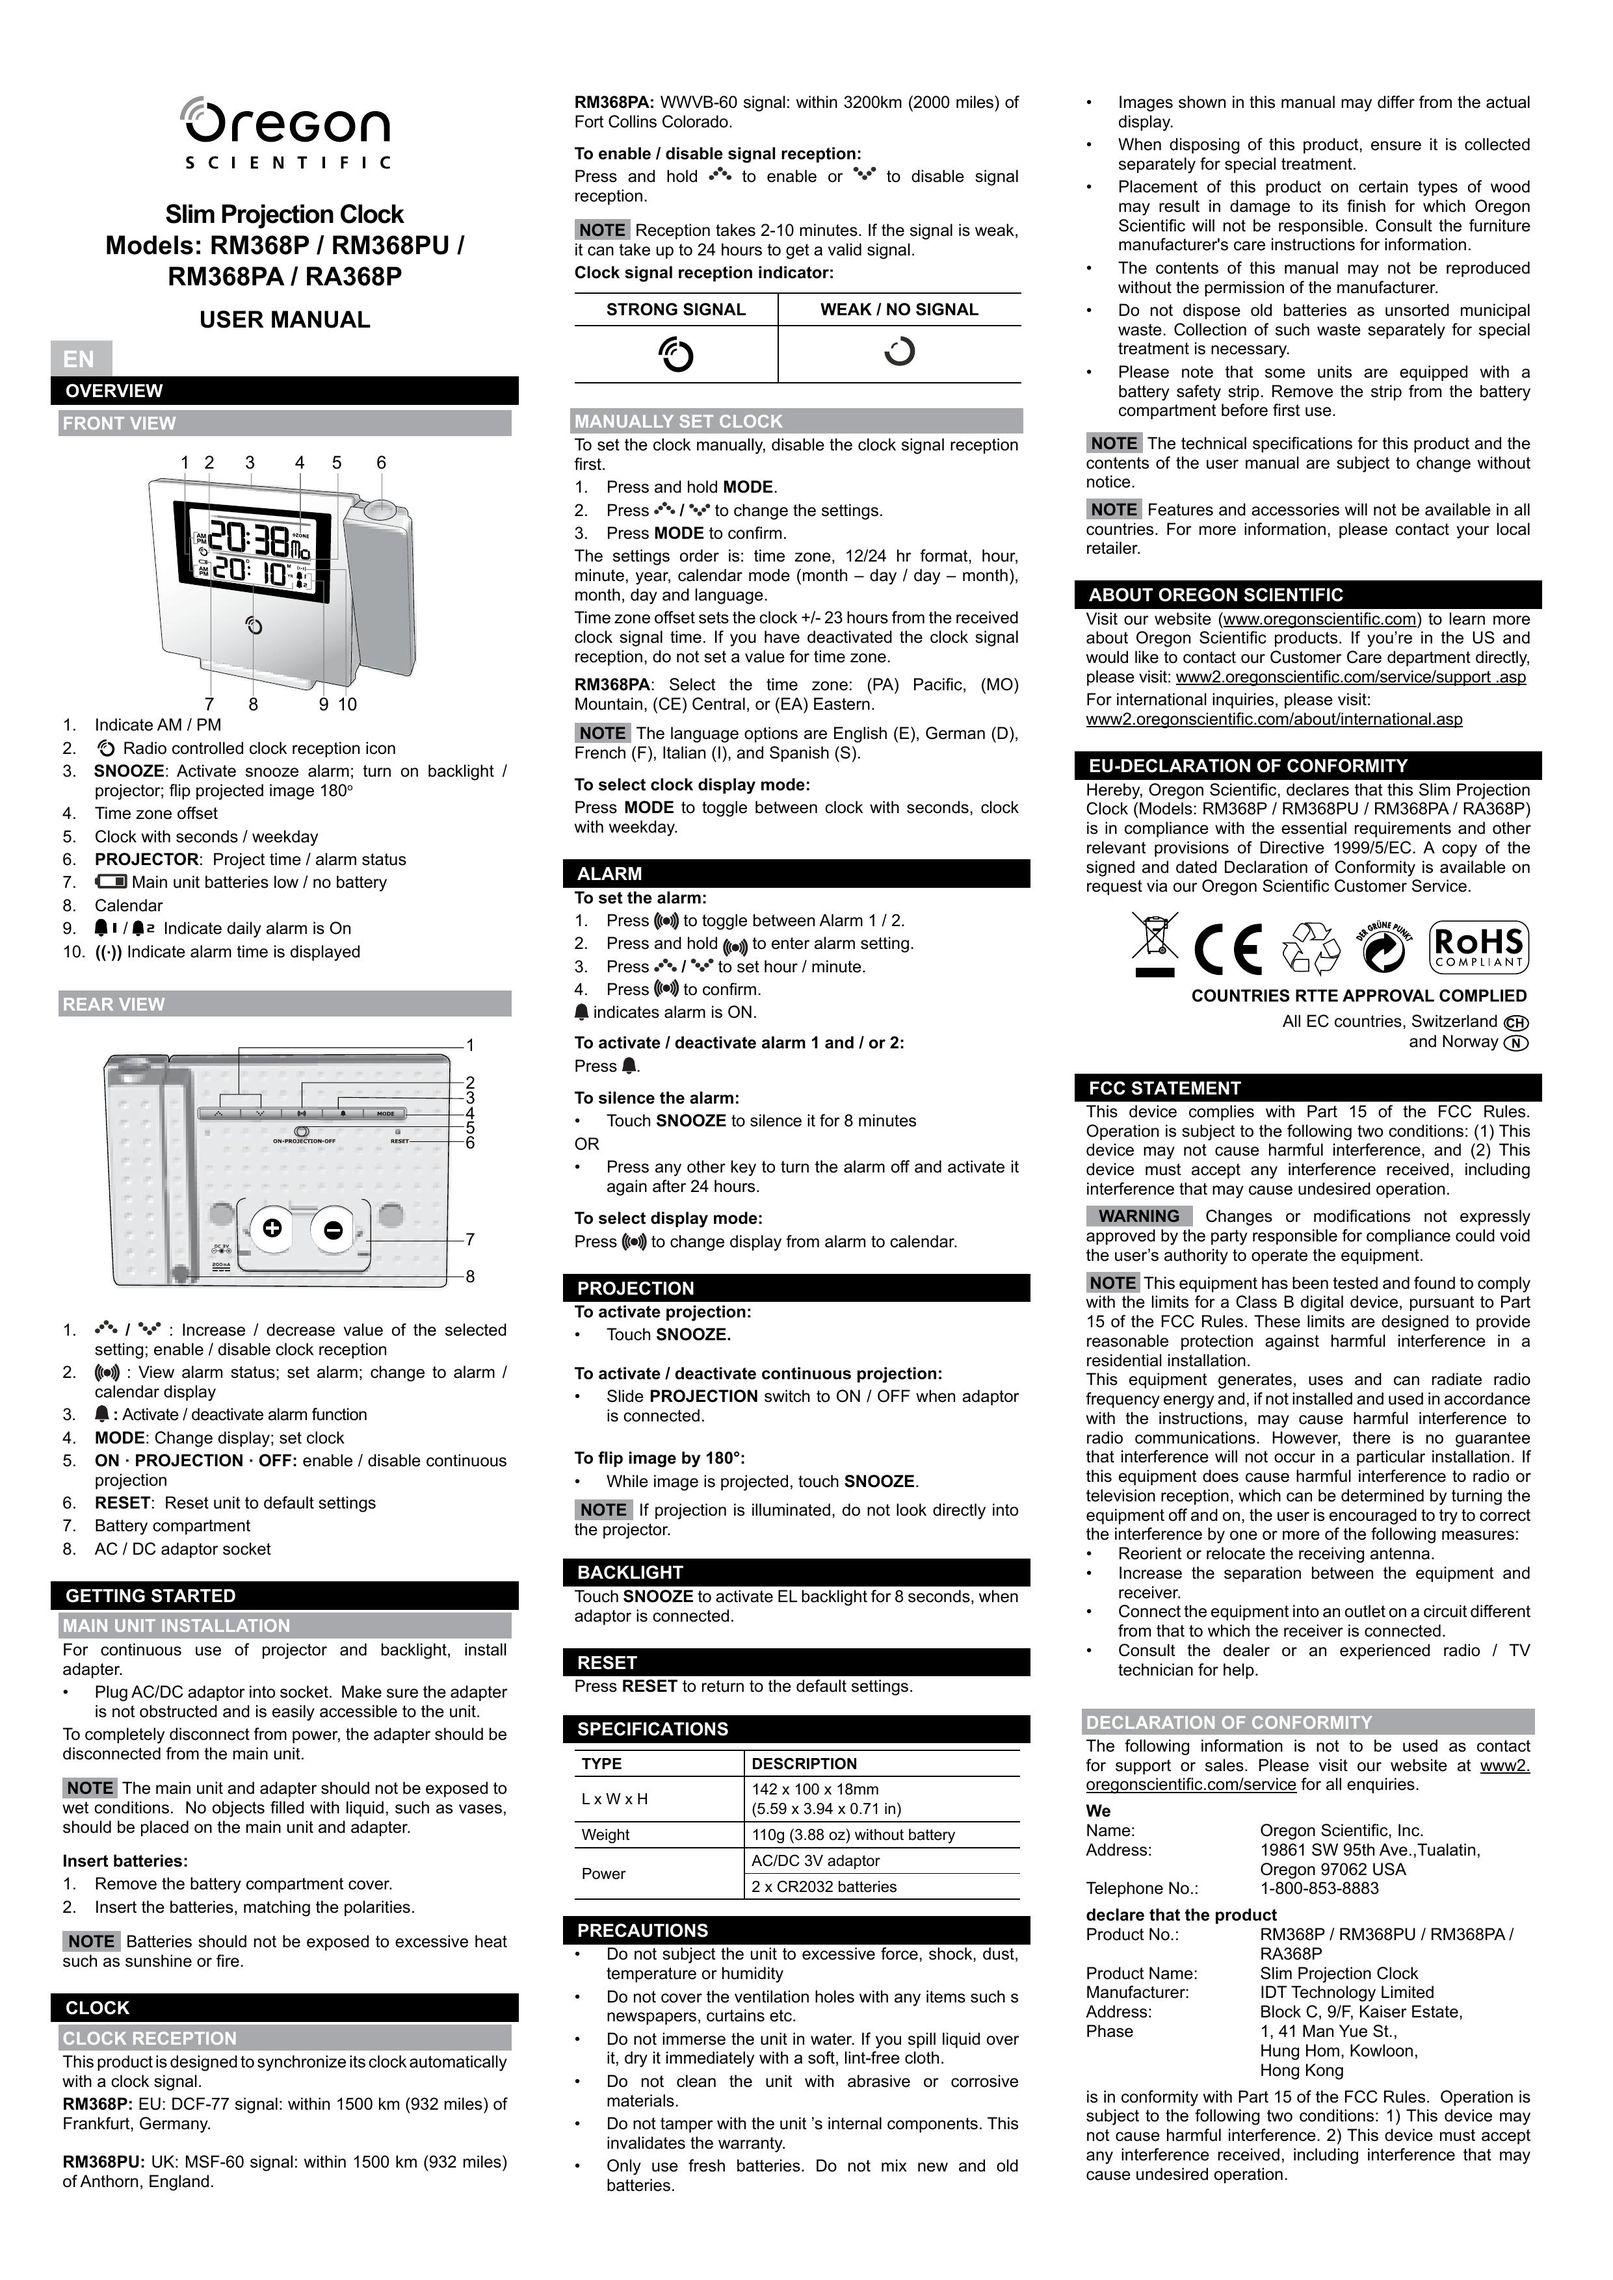 Oregon RM368PA Clock User Manual